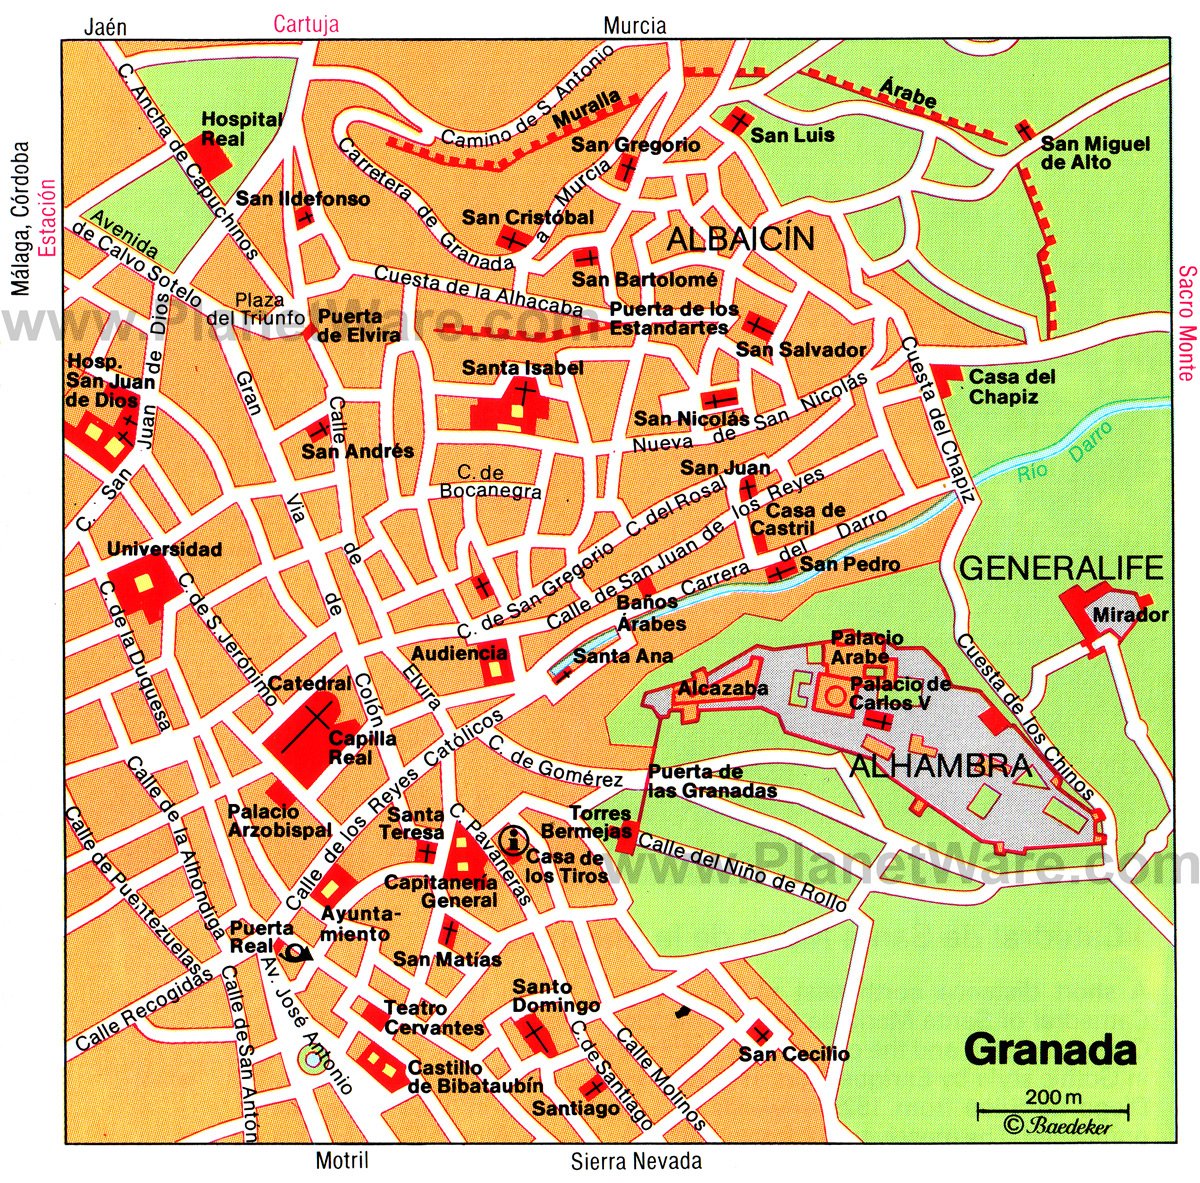 MAP OF GRANADA | ColoradoMap.org